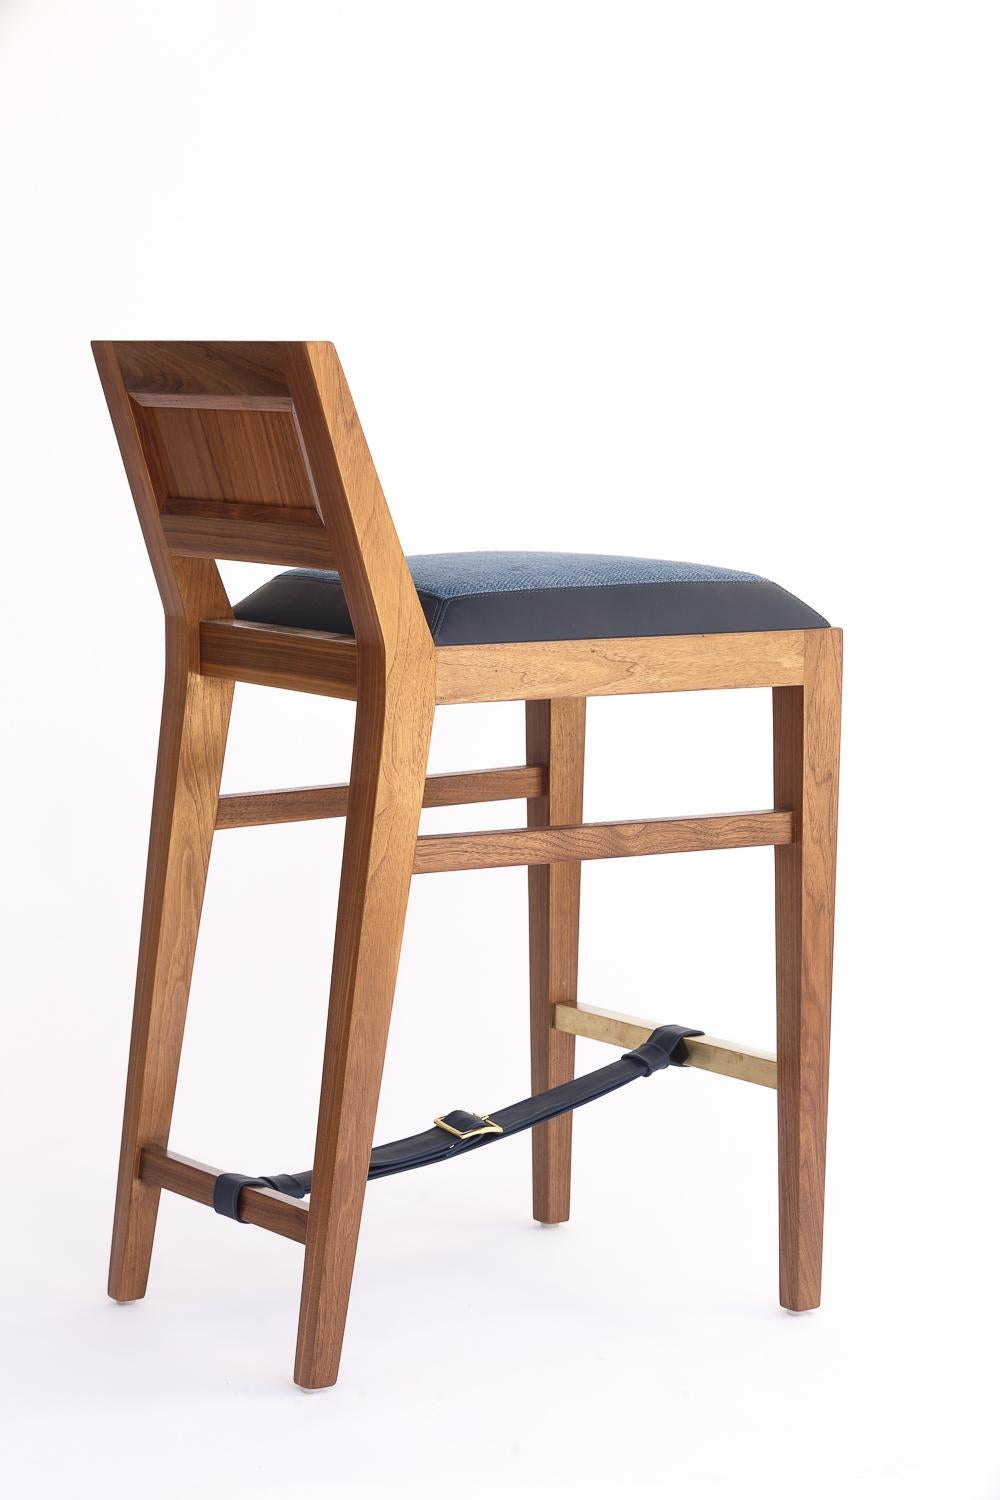 walnut counter stools with backs